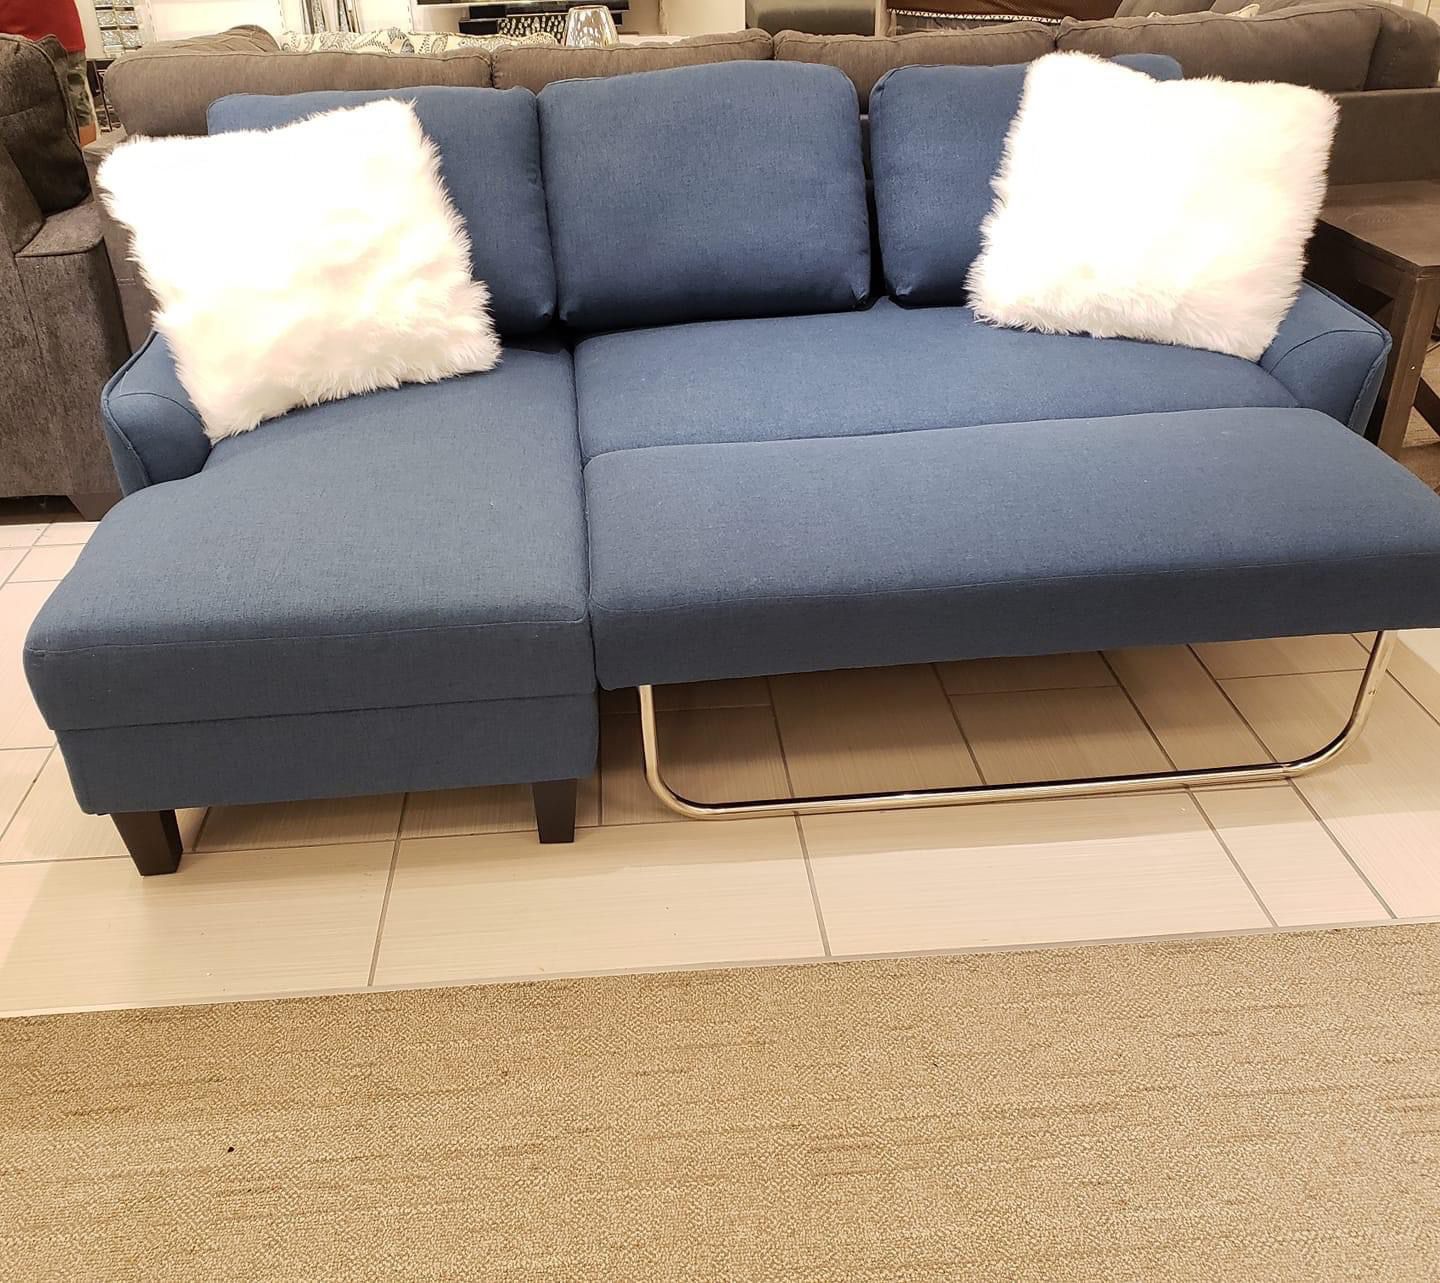 $599 Brand new sofa sleeper in stock